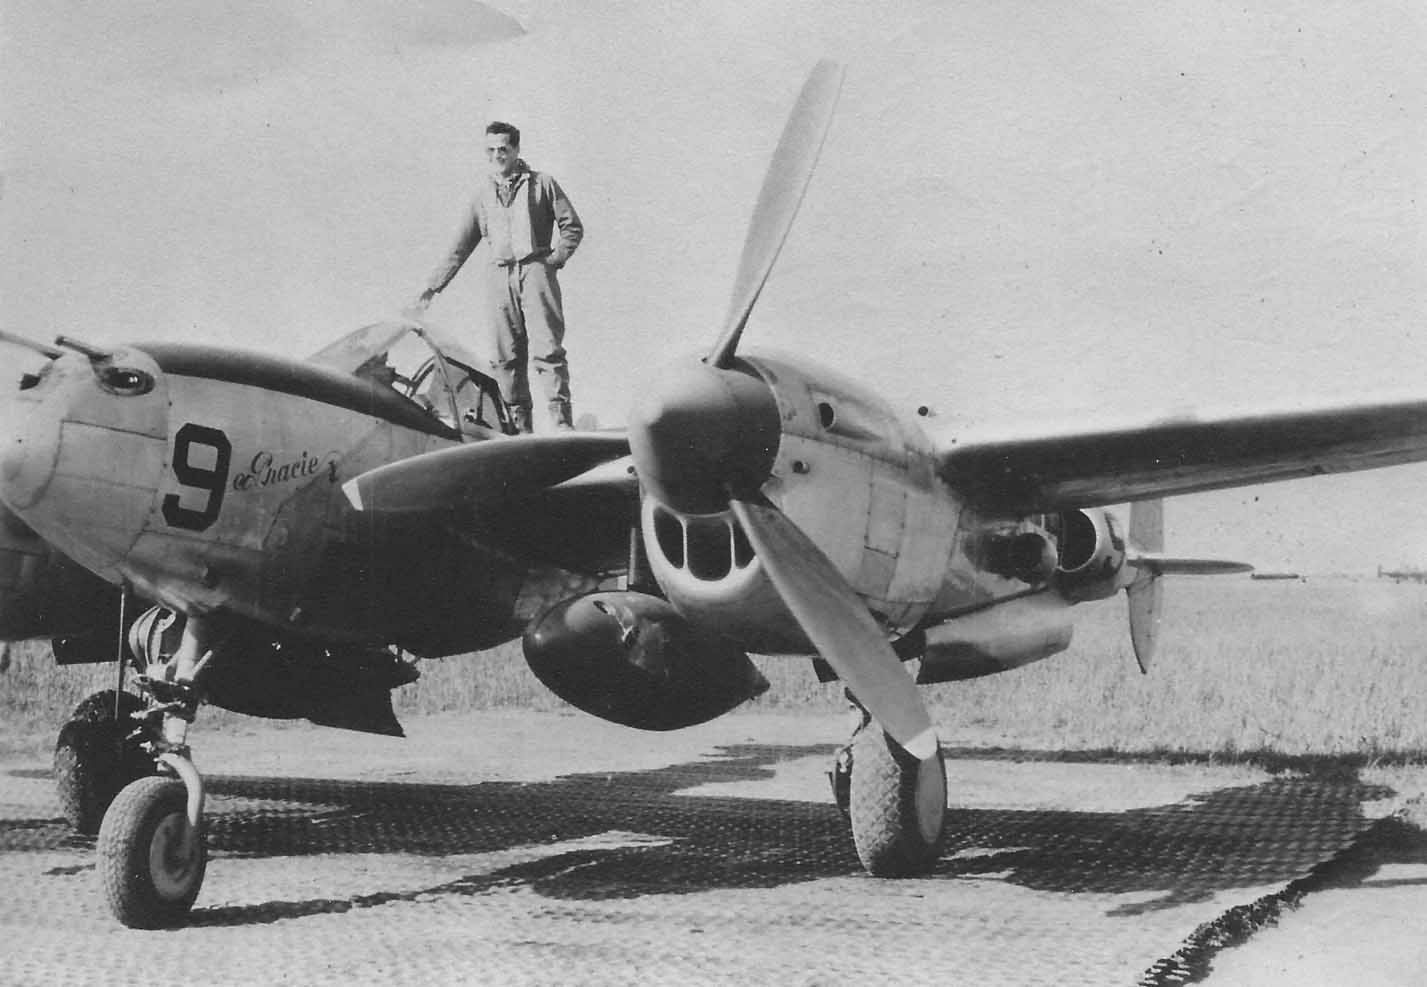 Lockheed P 38 Lightning 9 Gracie World War Photos